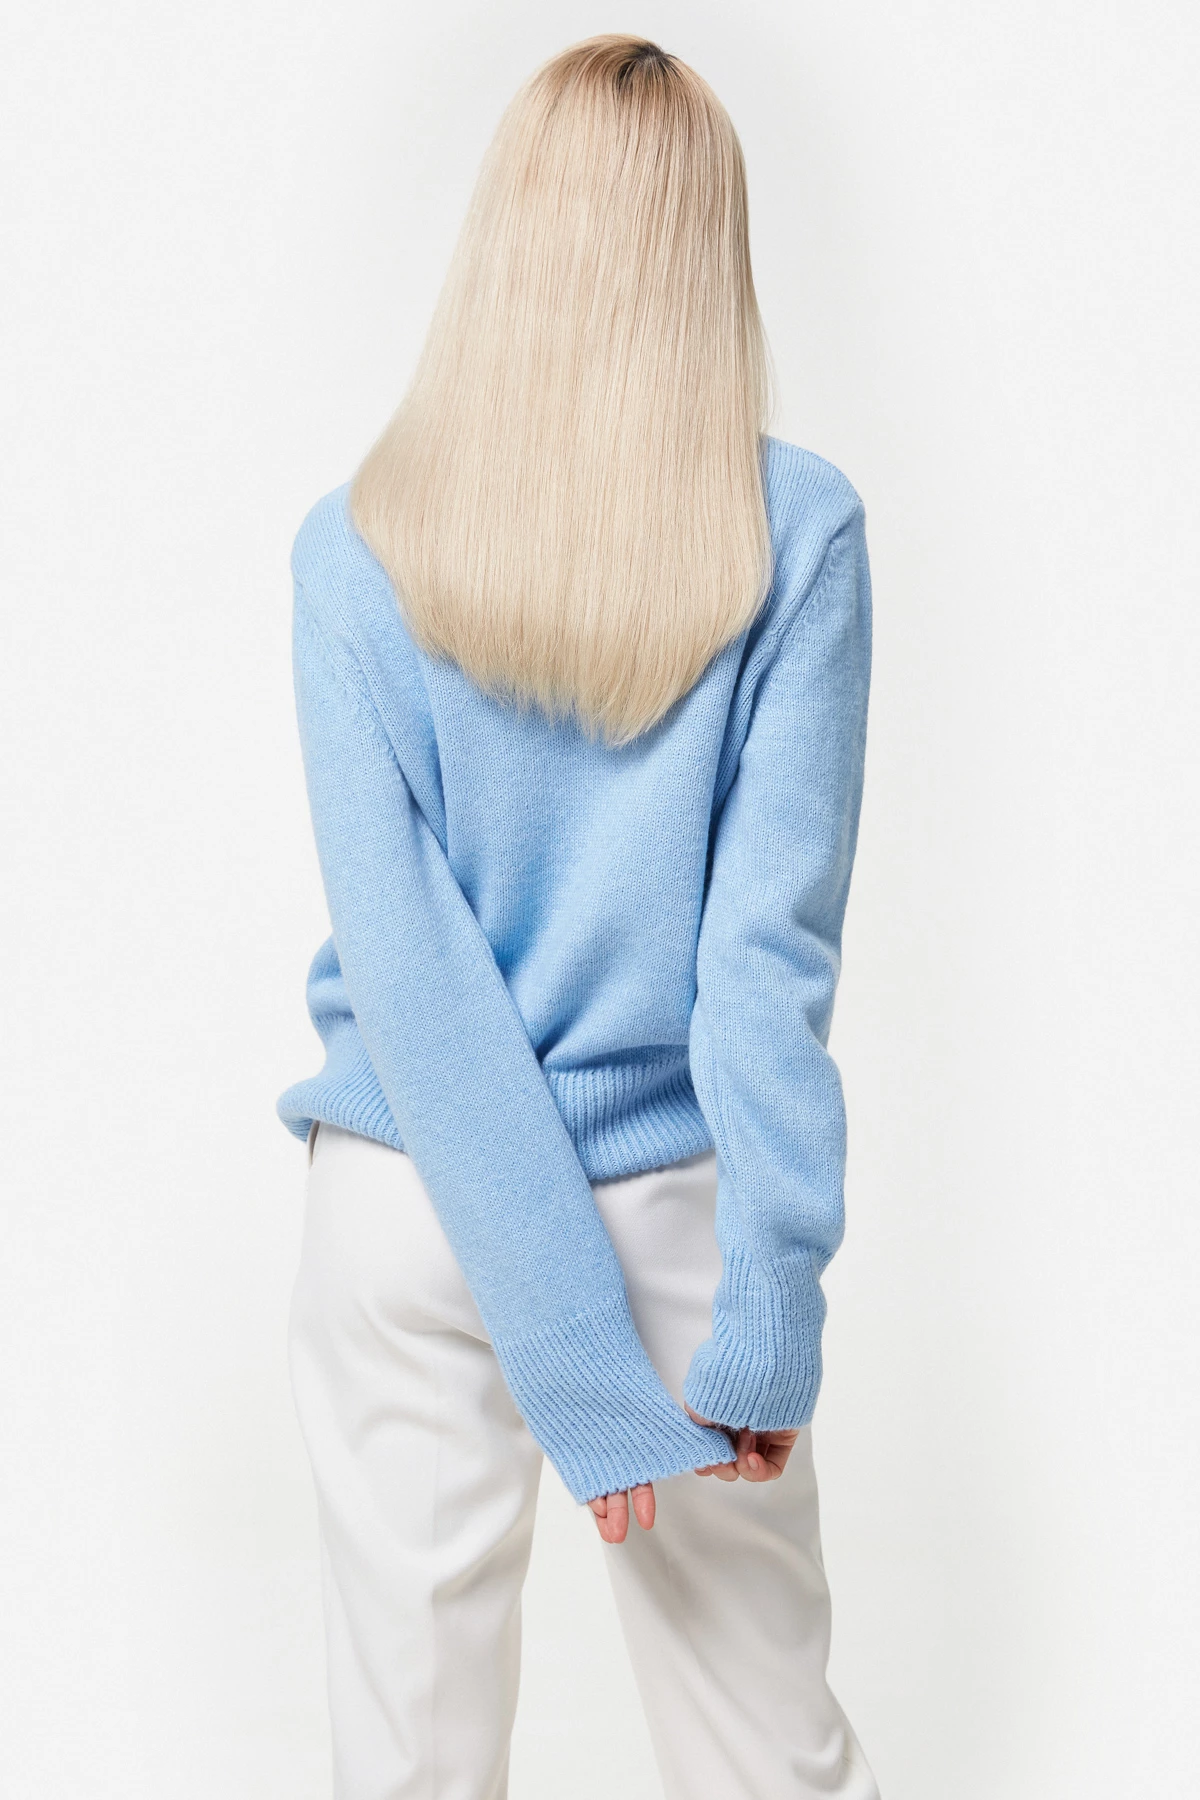 Голубой вязаный базовый свитер с шерсти - 12122 3299₴ 【MustHave ❤】